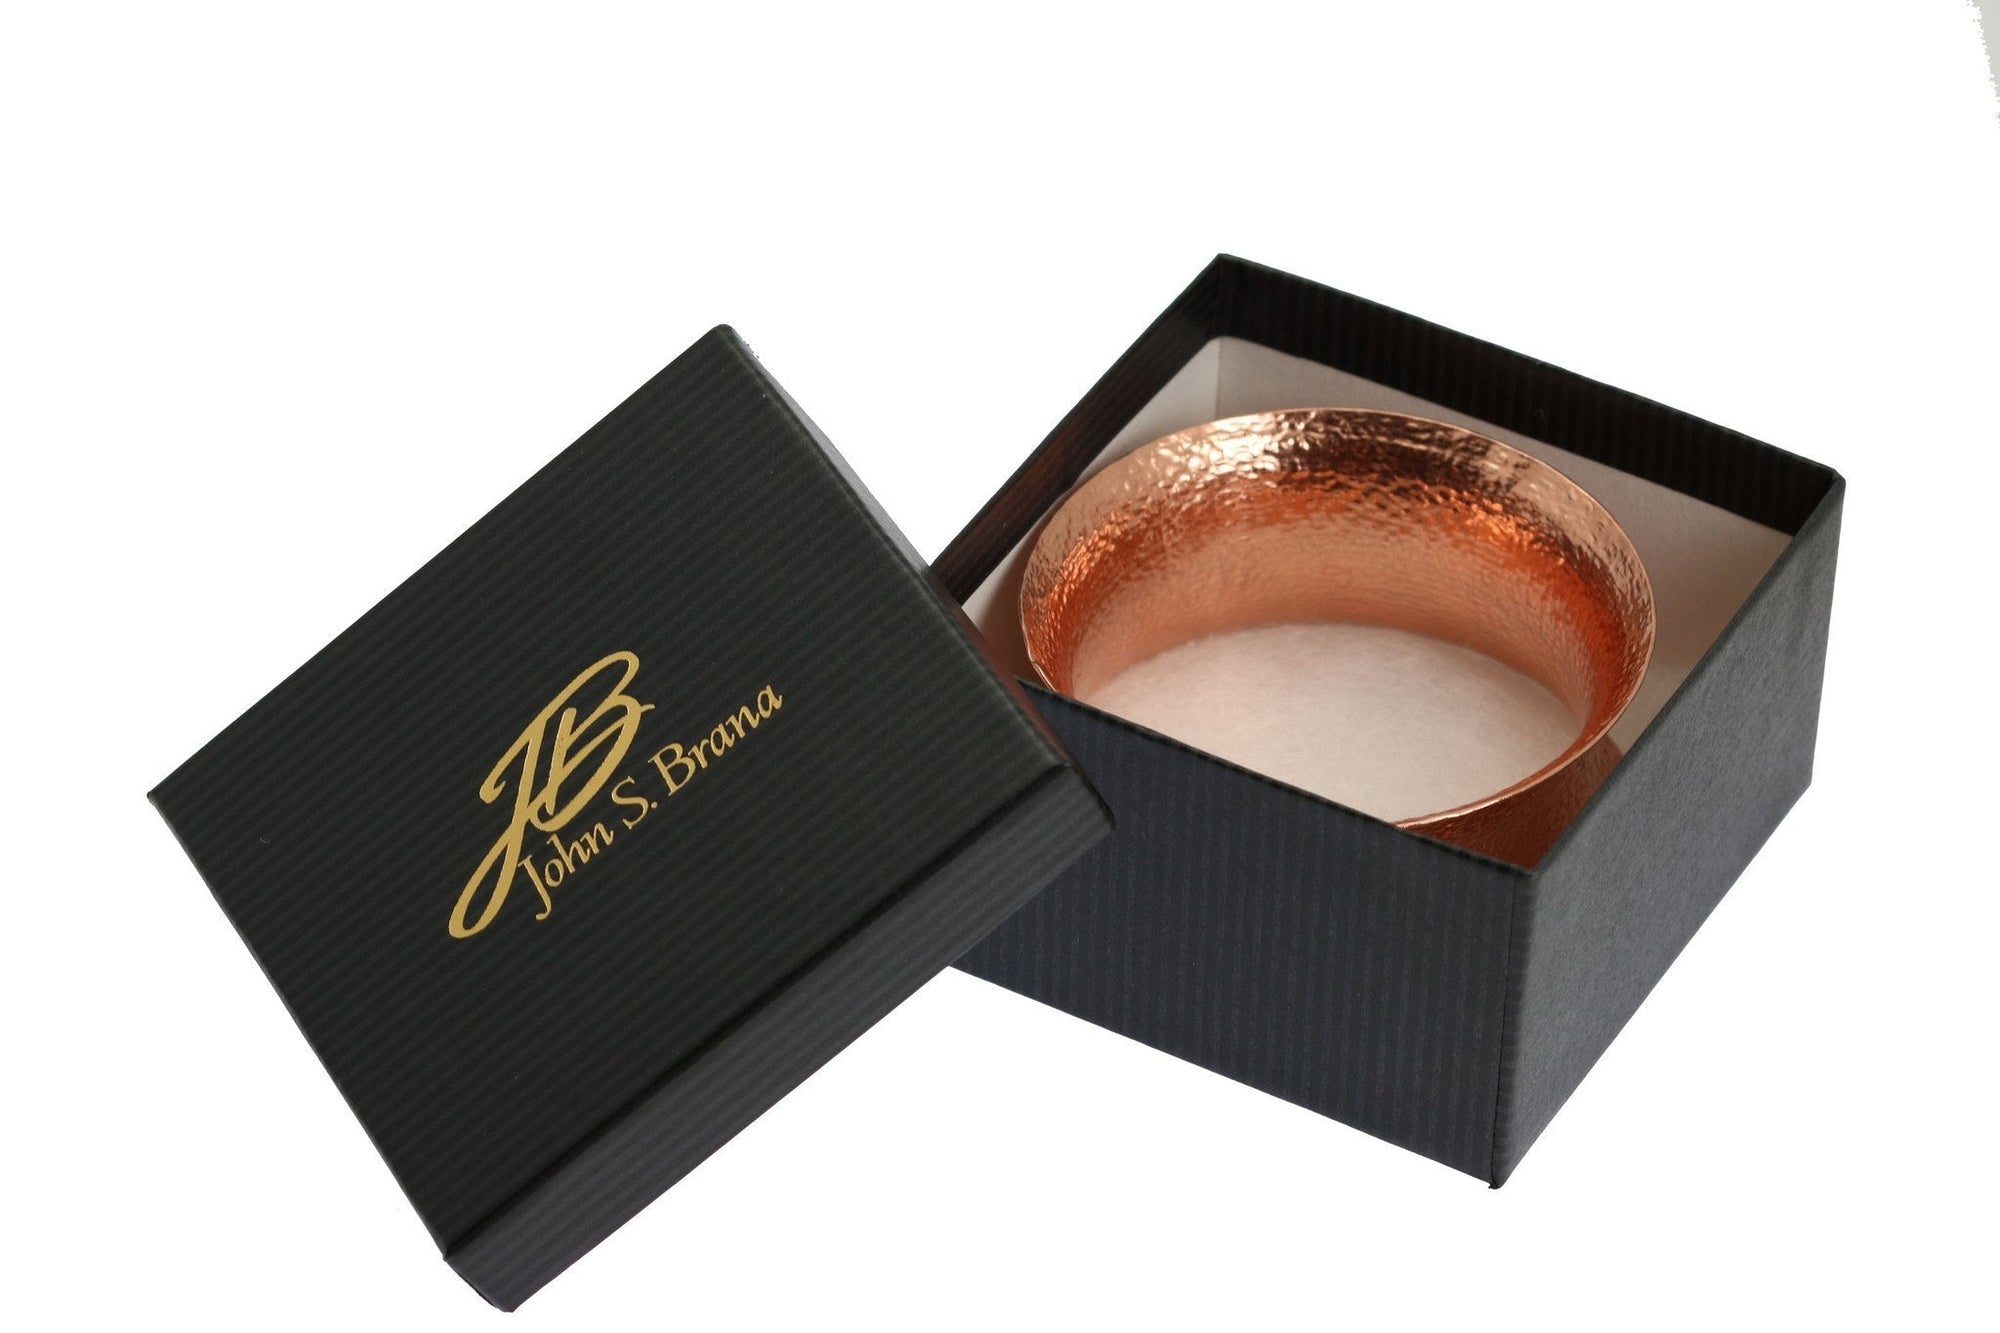 Texturized Copper Cuff Bracelet in Gift Box